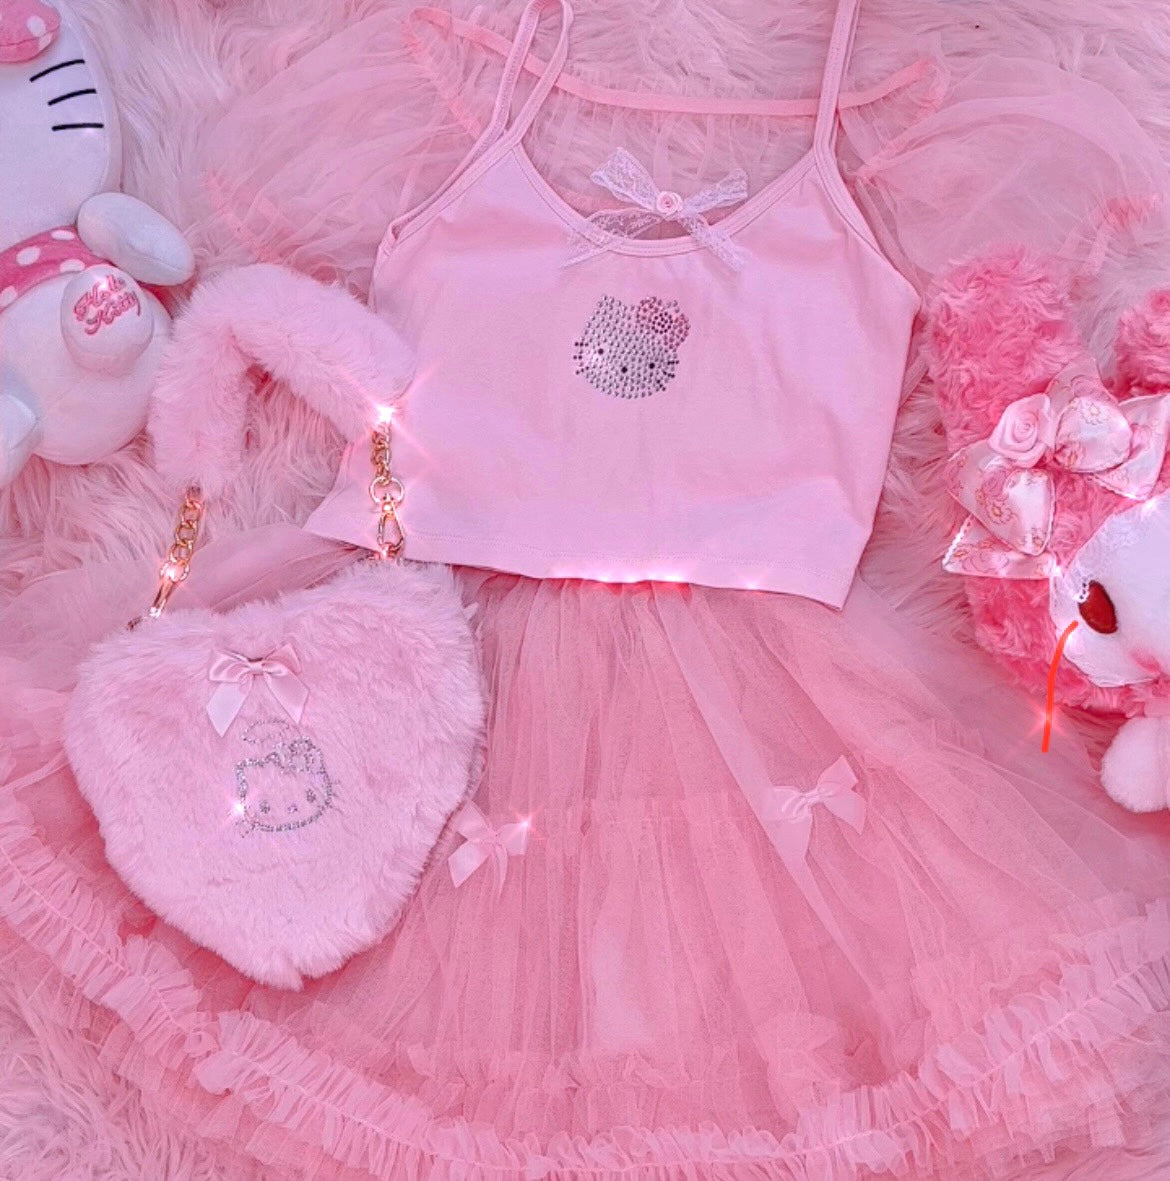 99% Angel Sheer Dress (Pink)